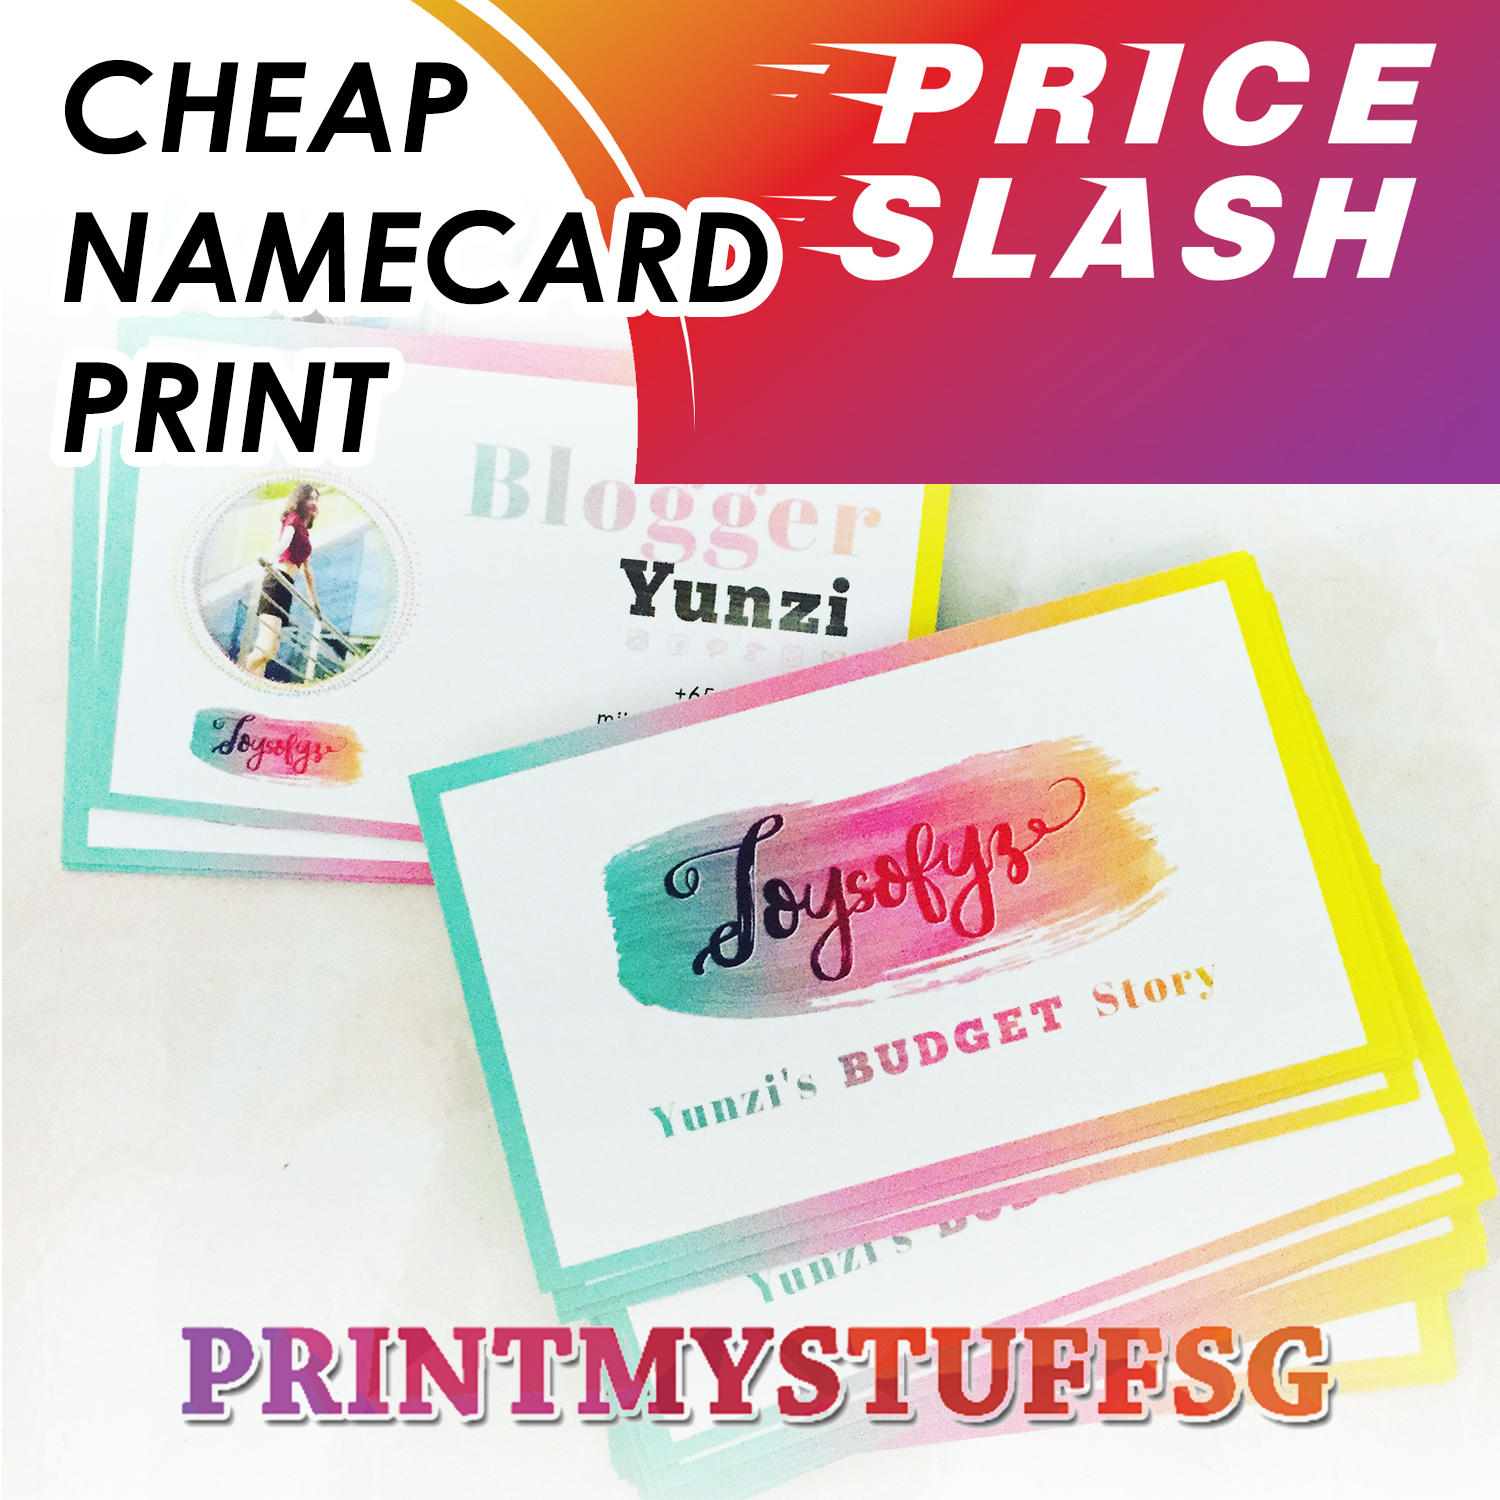 cheapnamecardprint